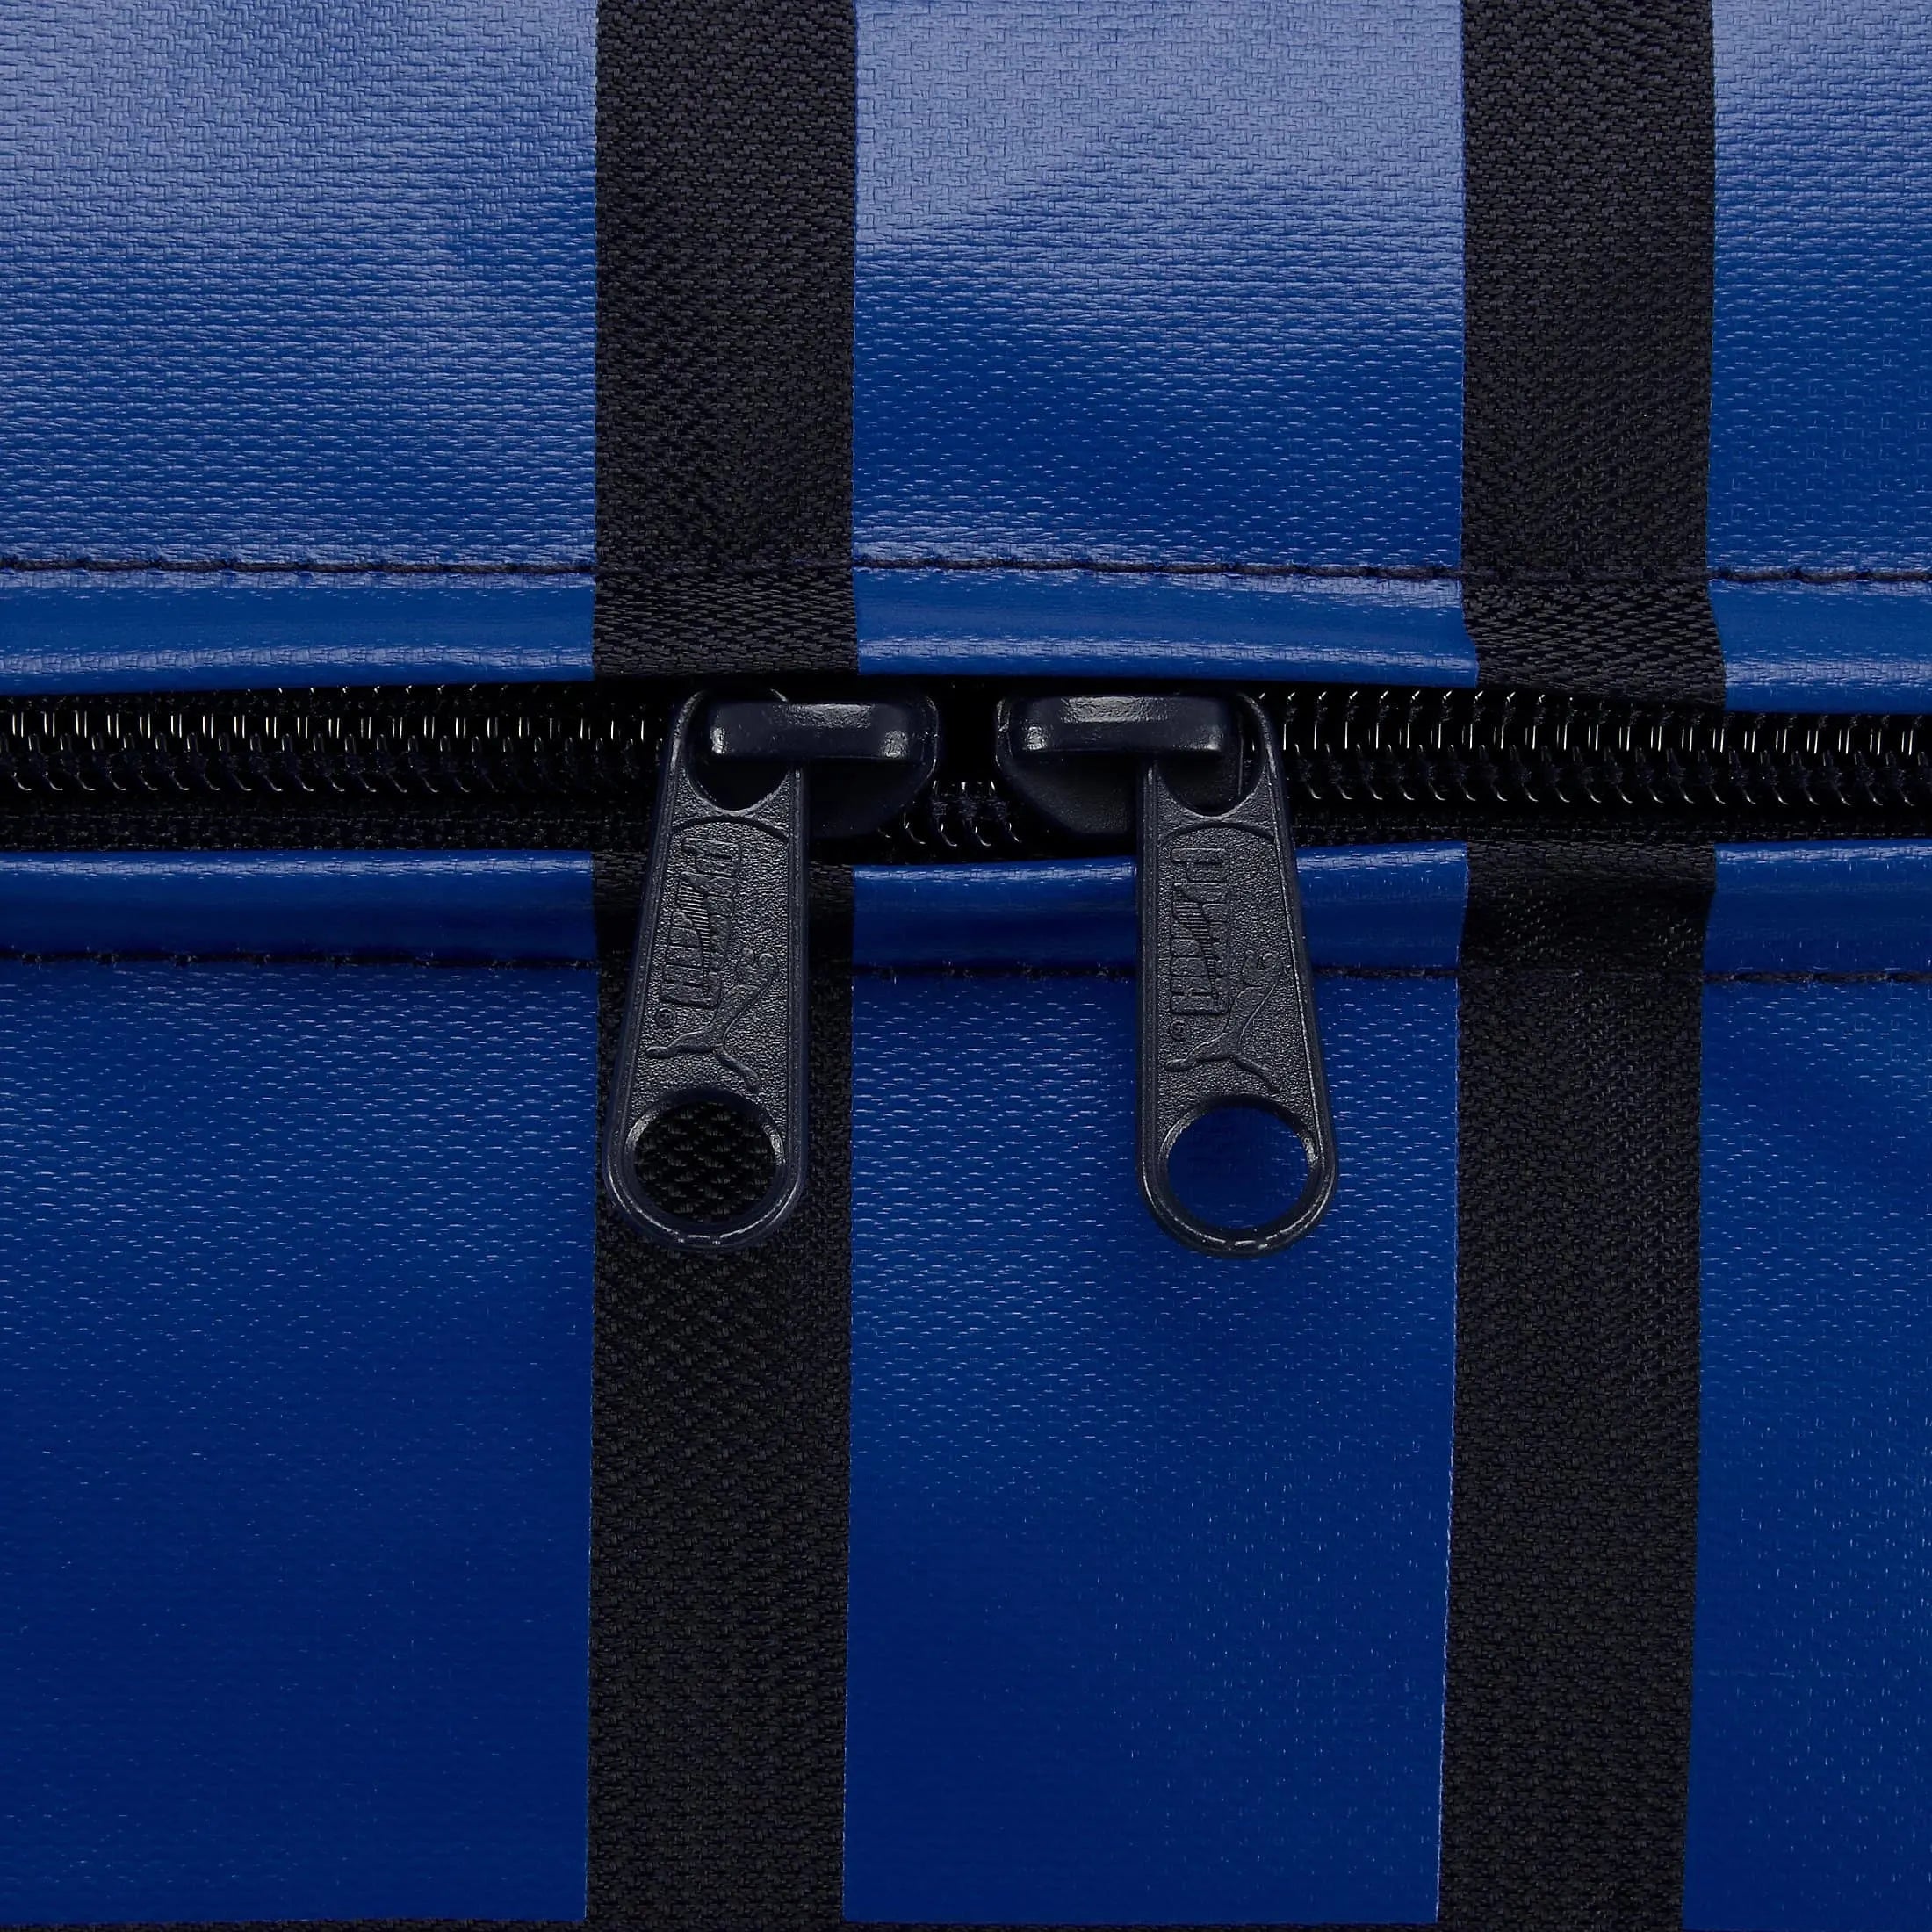 Puma Sole Grip Bag sac bandoulière 44 cm - bleu victoria-new marine-buttercup